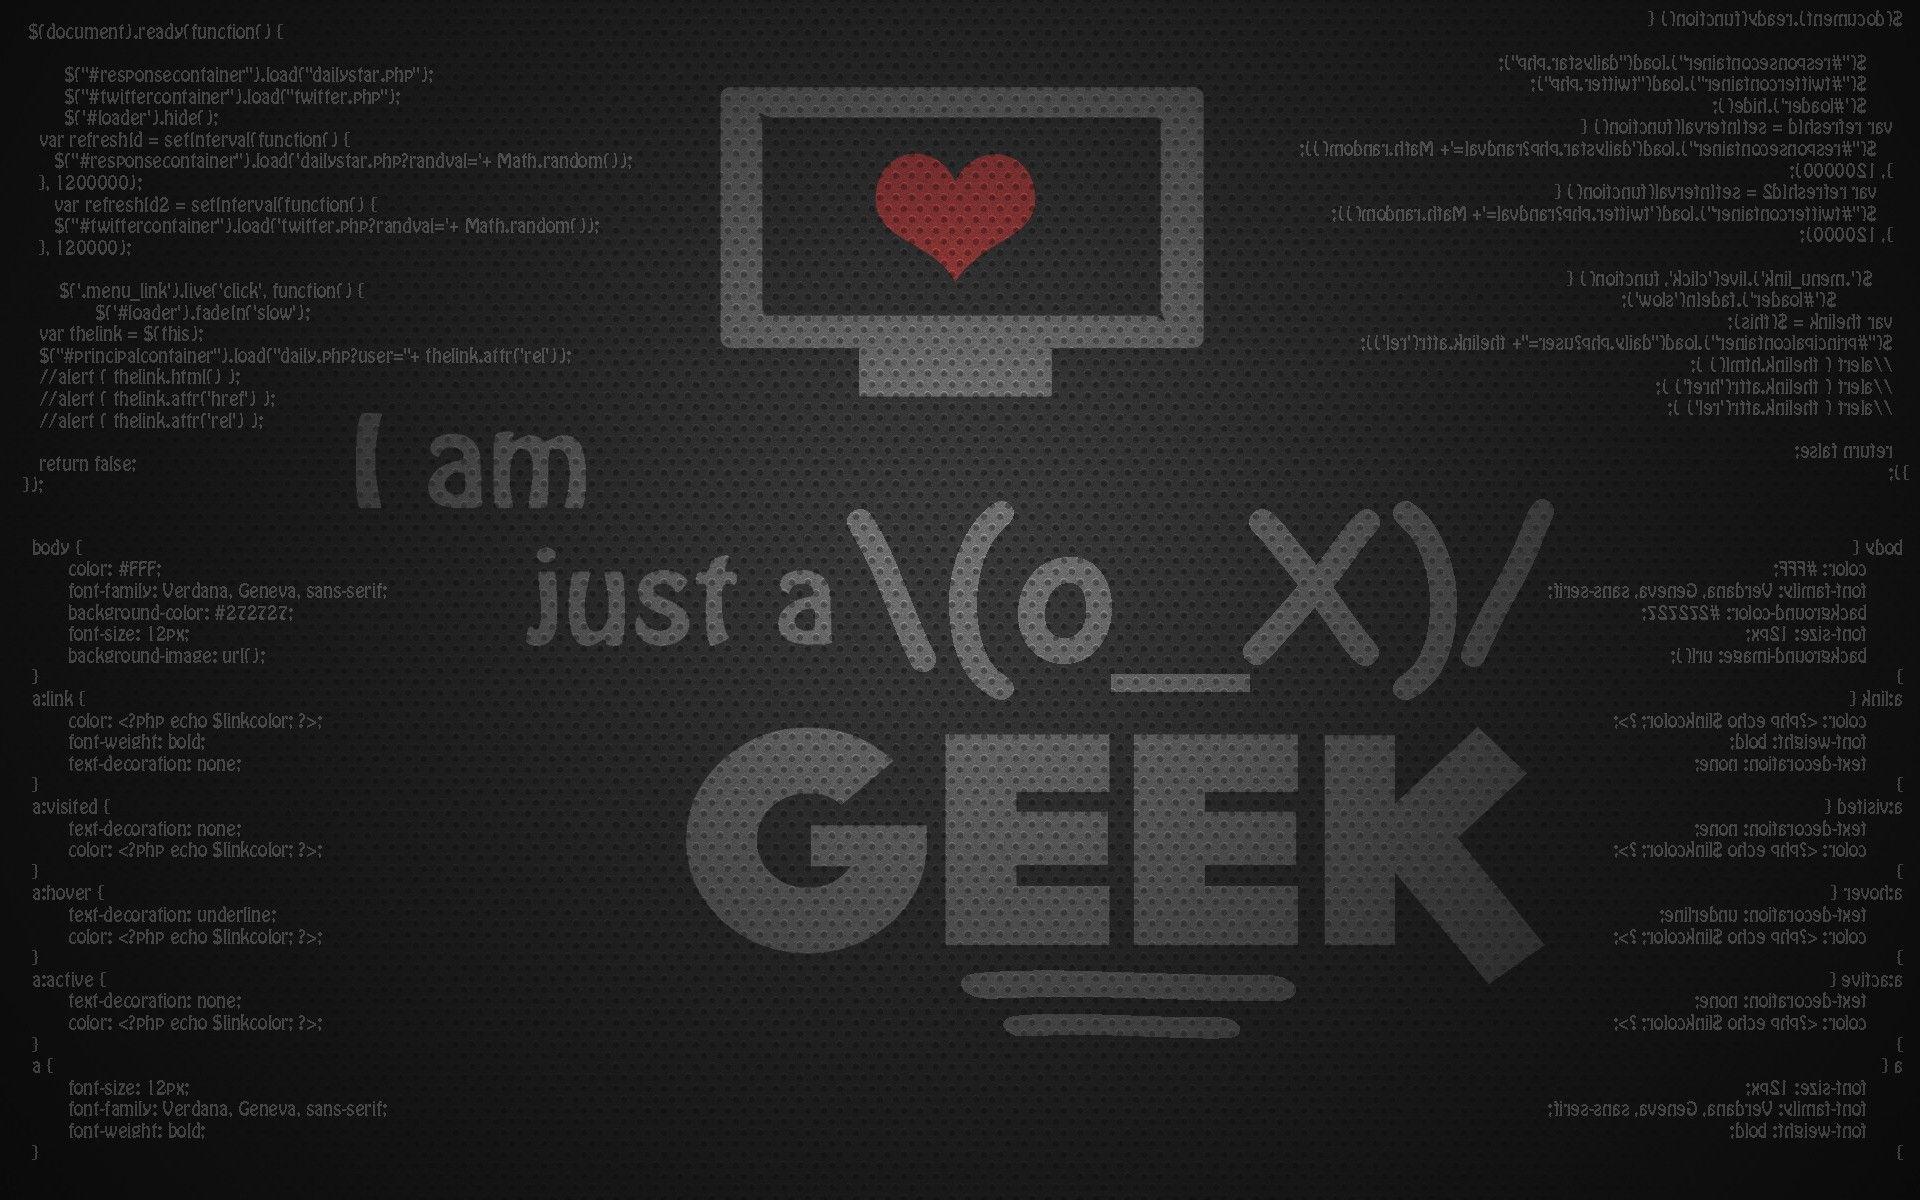 Download the I Am Just A Geek Wallpaper, I Am Just A Geek iPhone